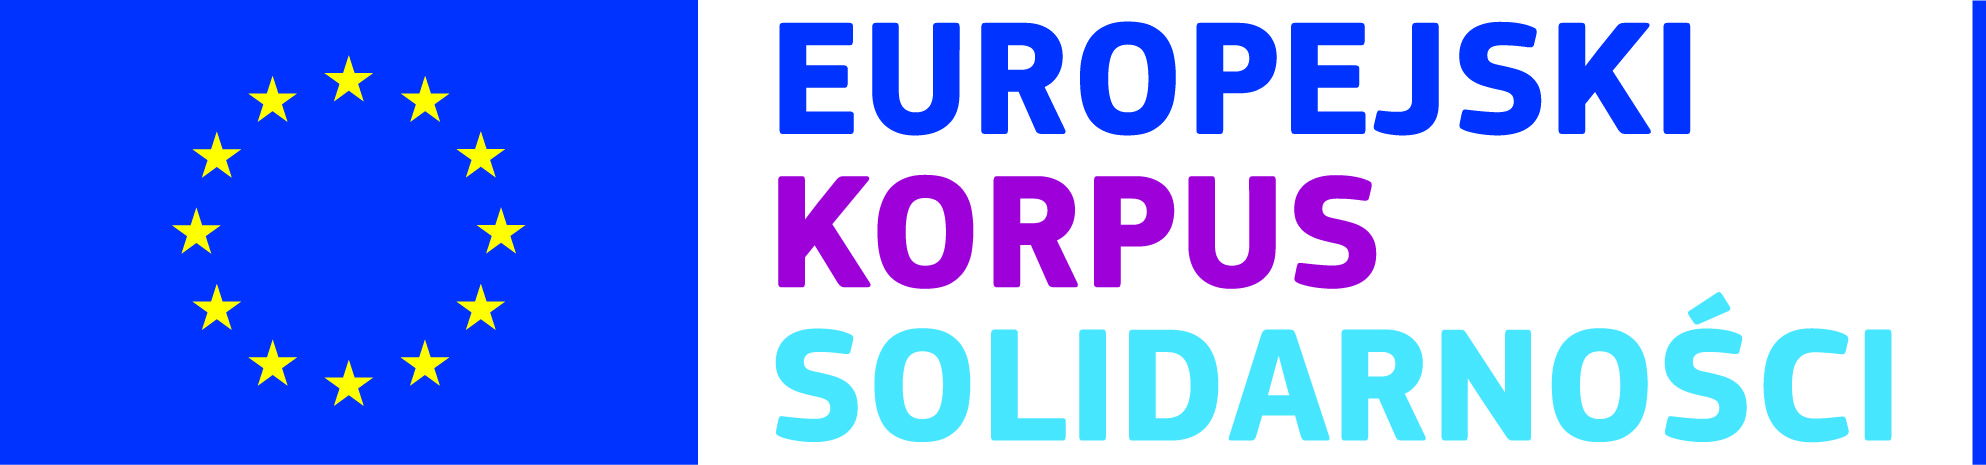 PL european solidarity corps LOGO CMYK